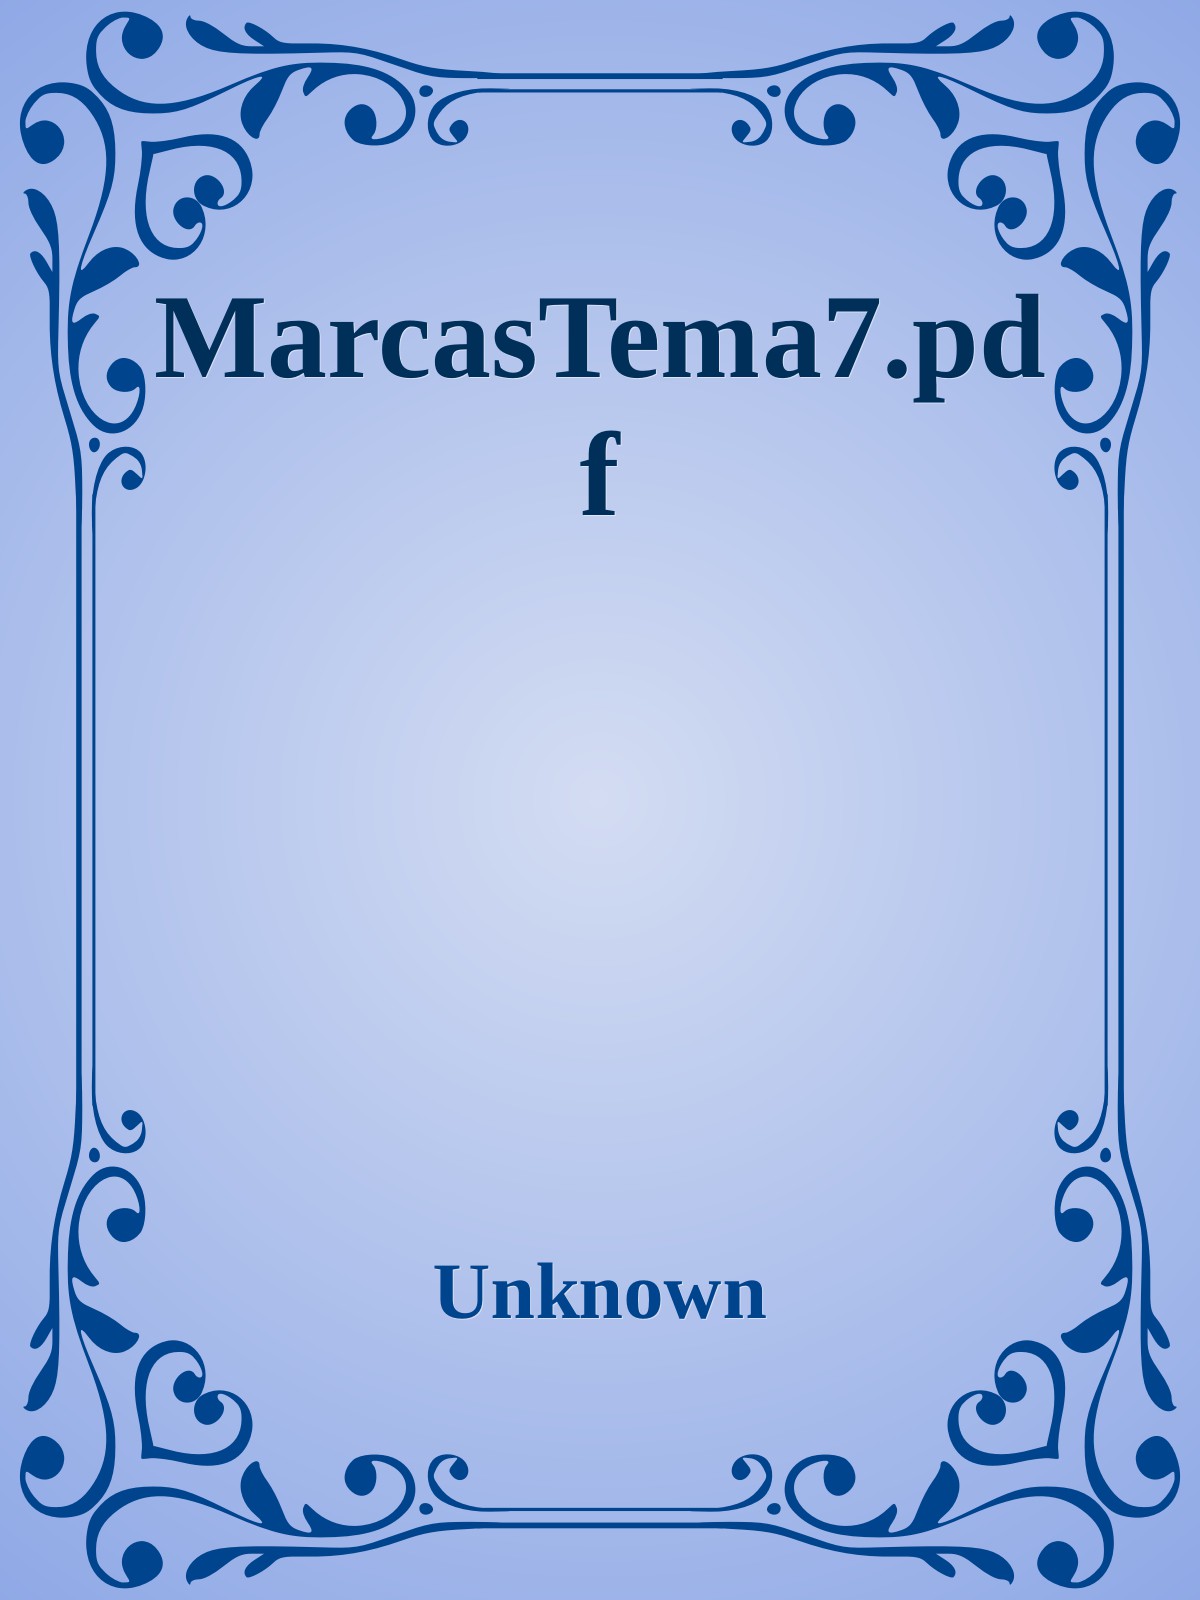 MarcasTema7.pdf